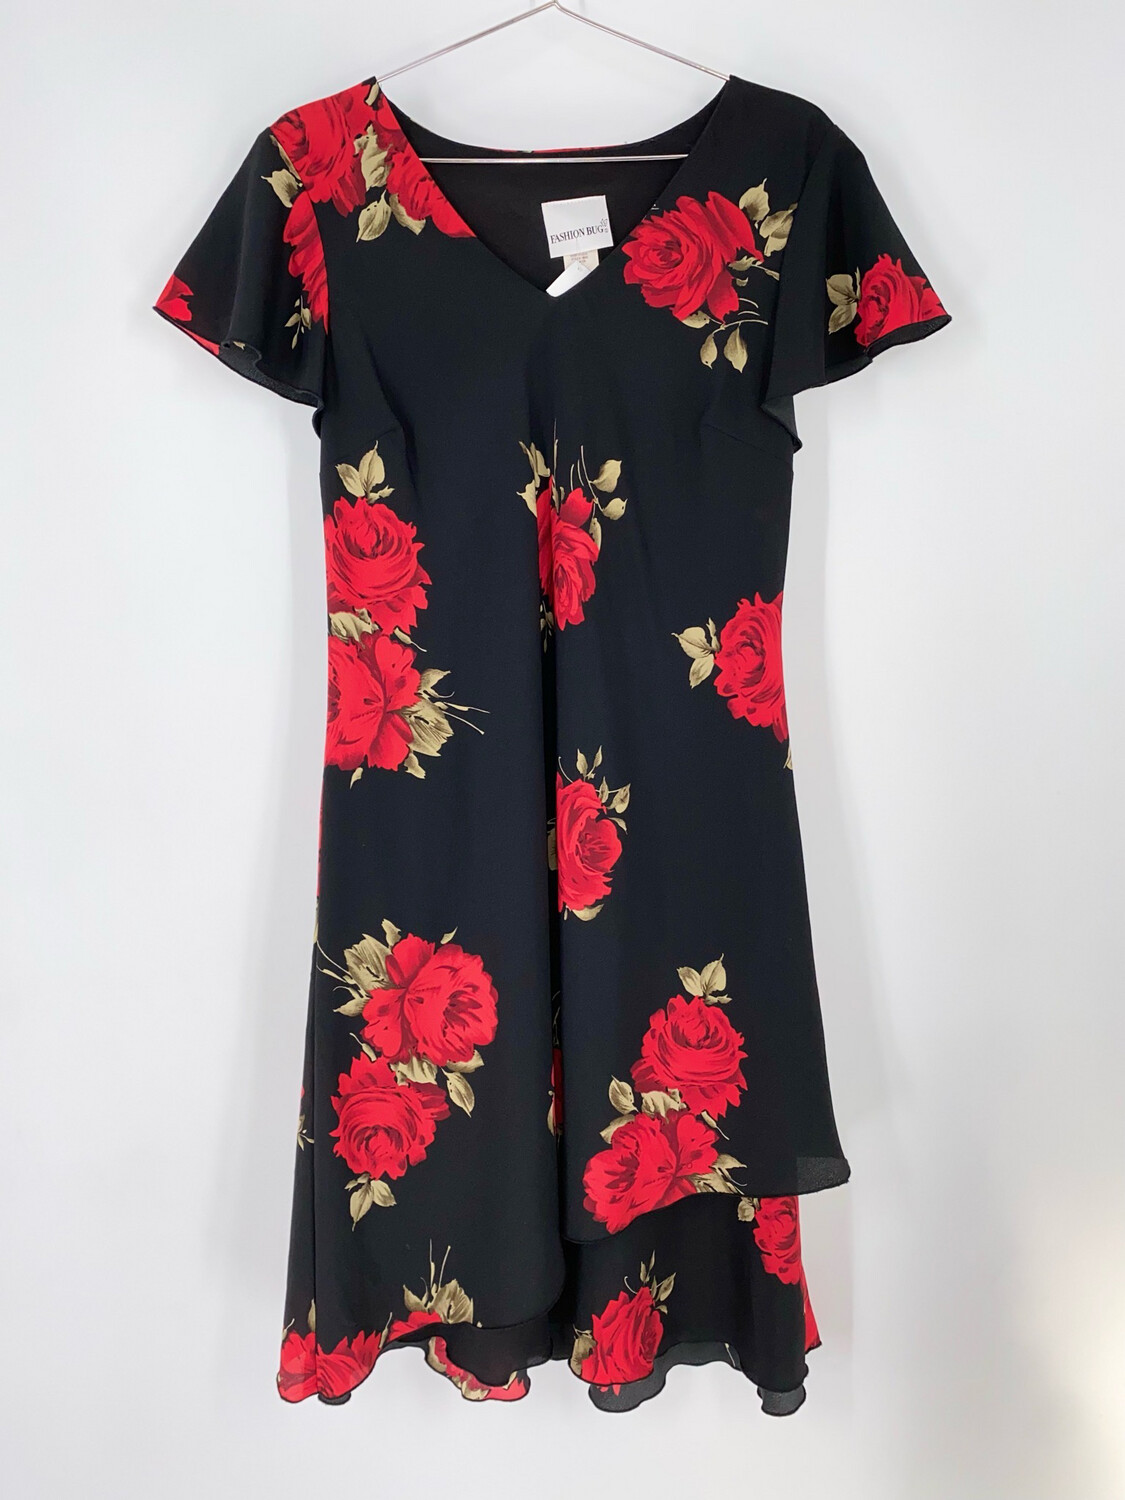 Fashion Bug Rose Print Dress Size M